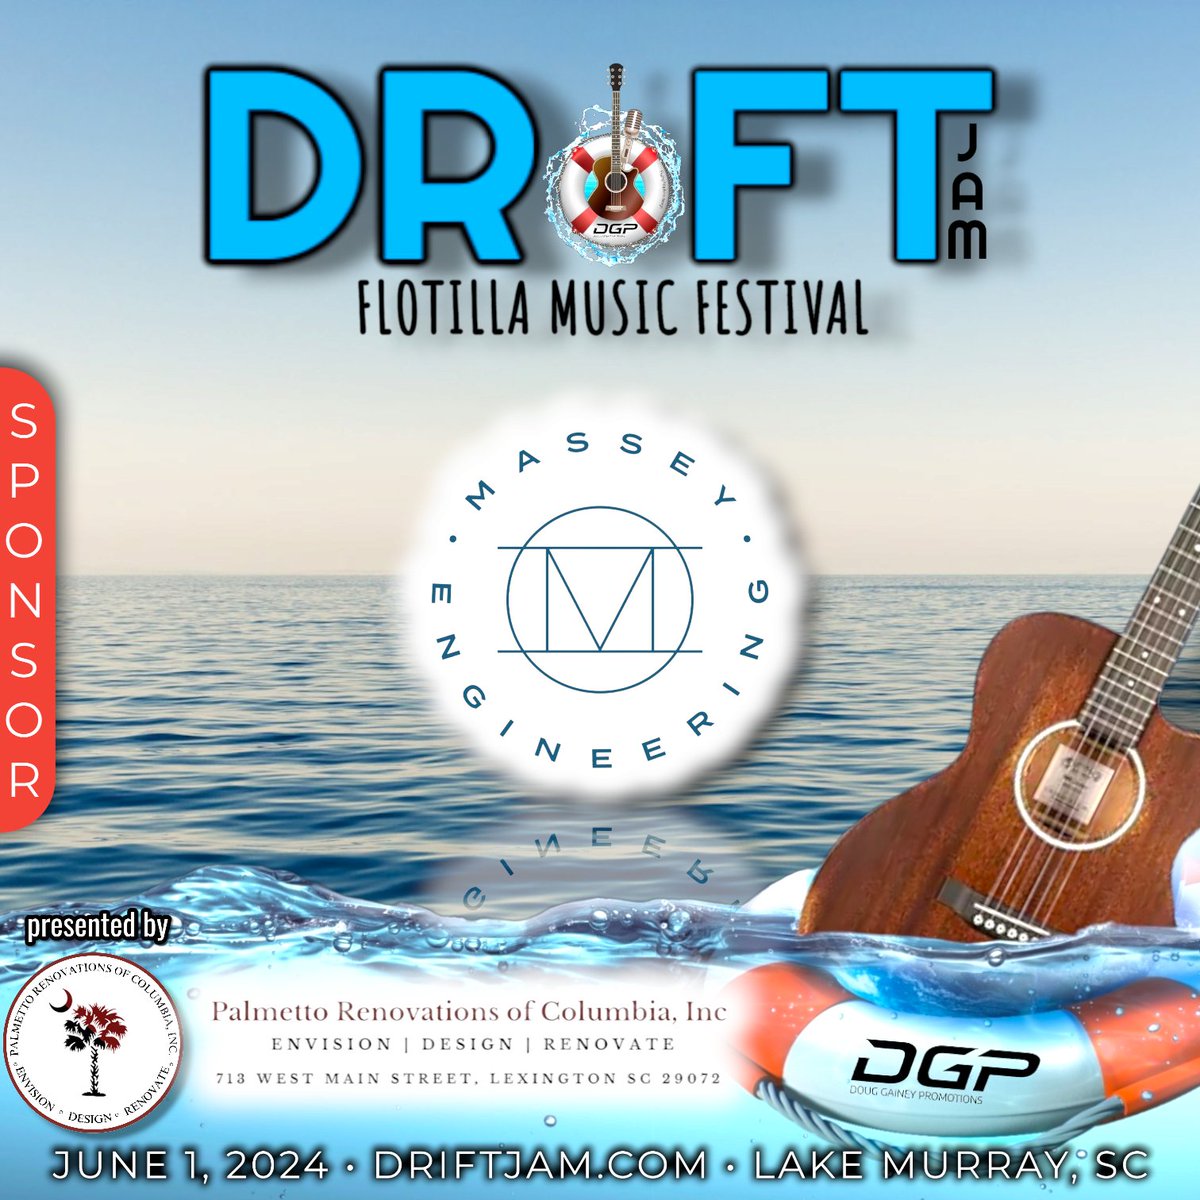 #sponsored ➡️ Massey Engineering
.
.
#driftjam #driftjam2024 #FloatingFestival #MusicOnWater #FinalYear #SafeSailing #MusicCharity #LastChance #FOMO #BoatLife #LastCallOnTheLake